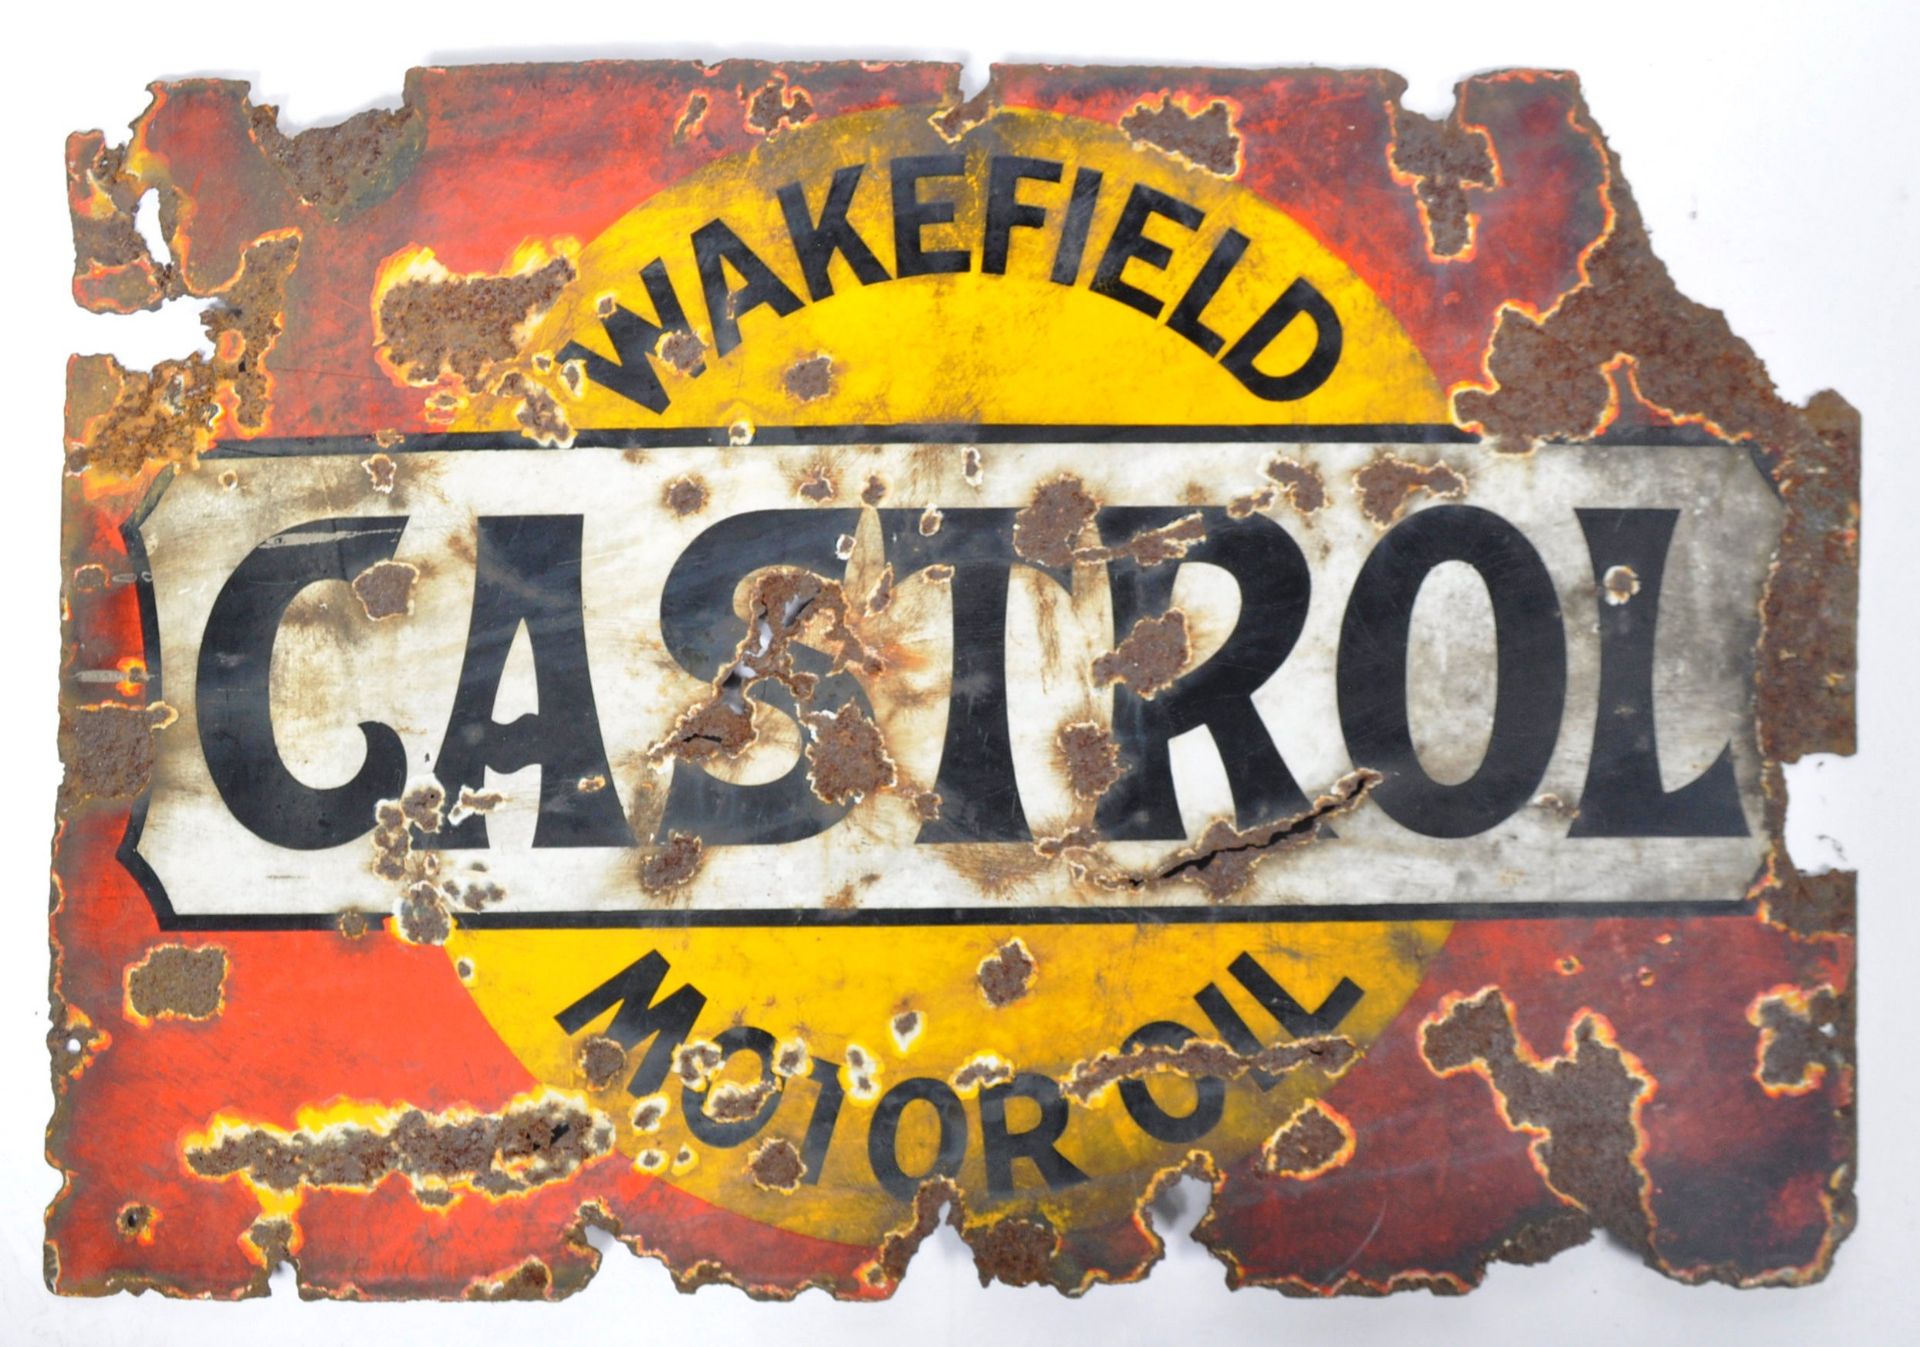 CASTROL WAKEFIELD MOTOR OIL - 1920S ENAMEL ADVERTISING SIGN